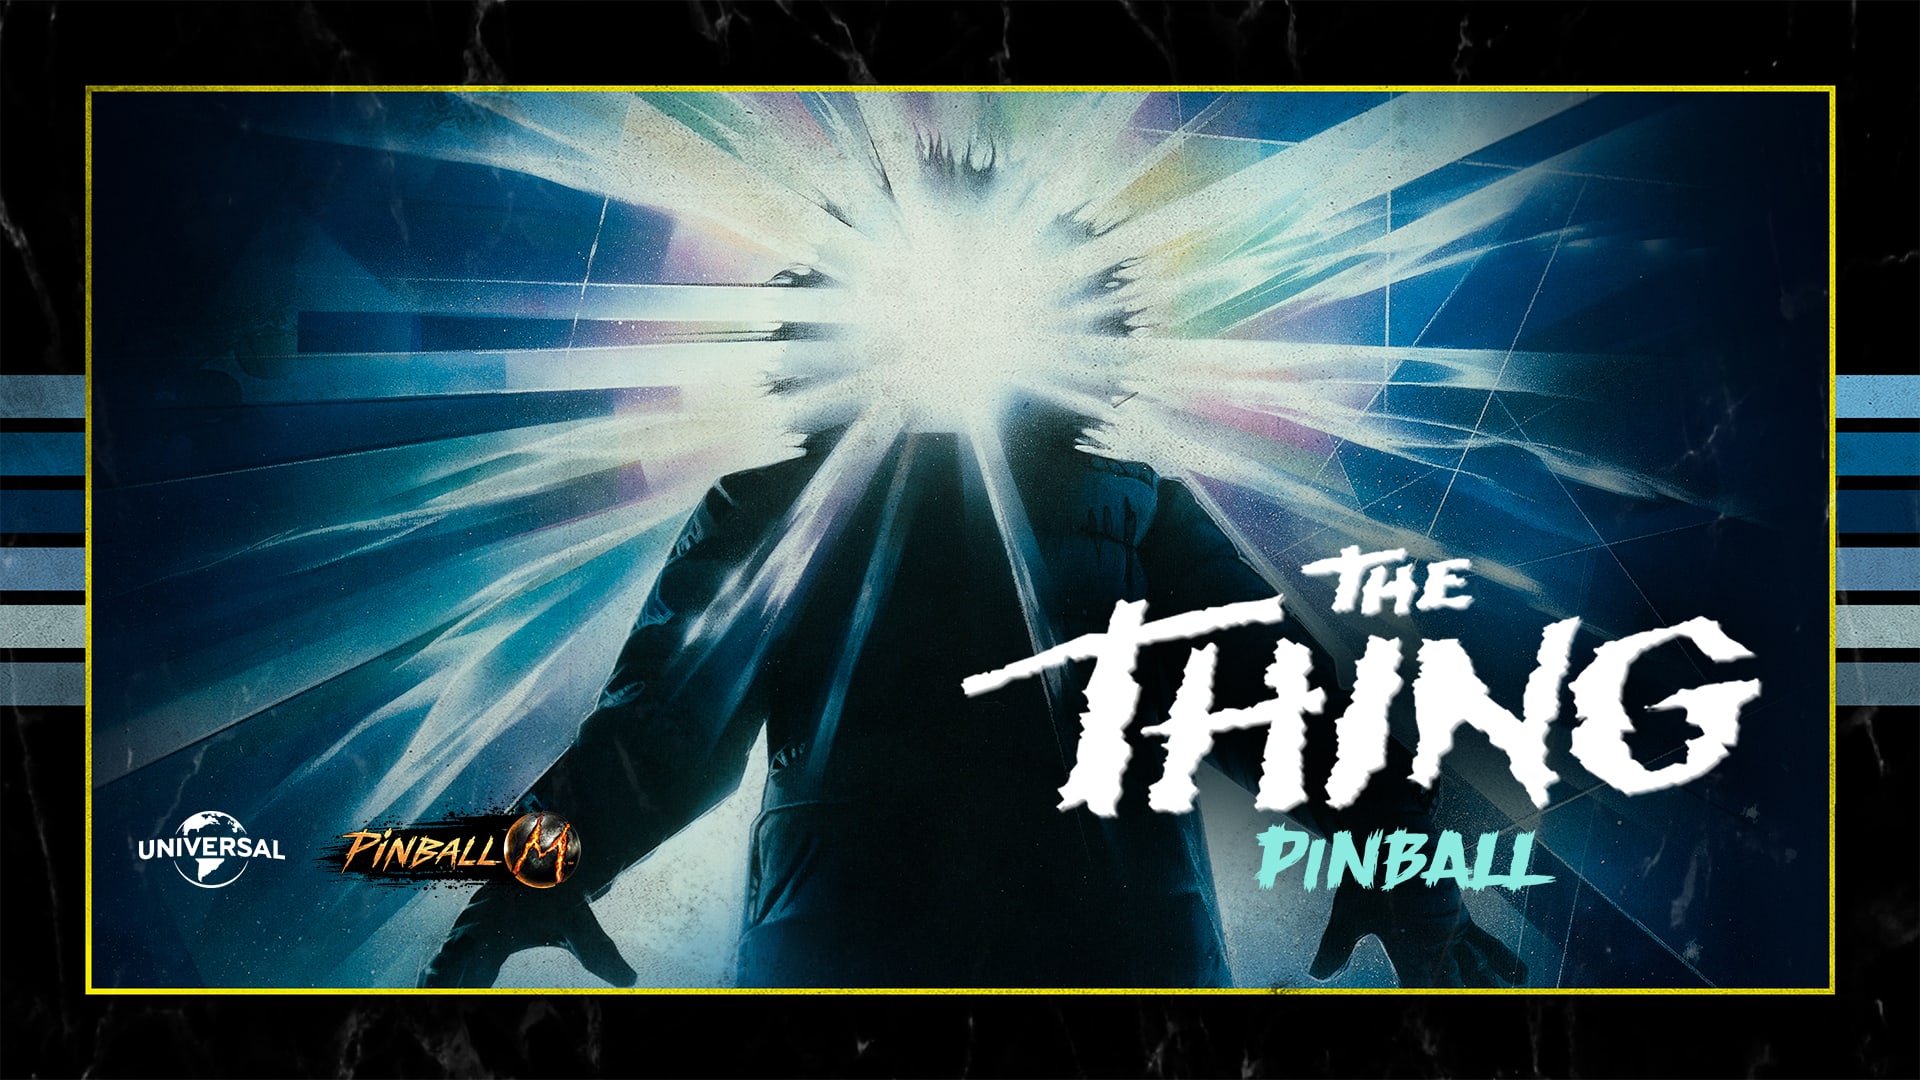 Pinball M - The Thing Pinball